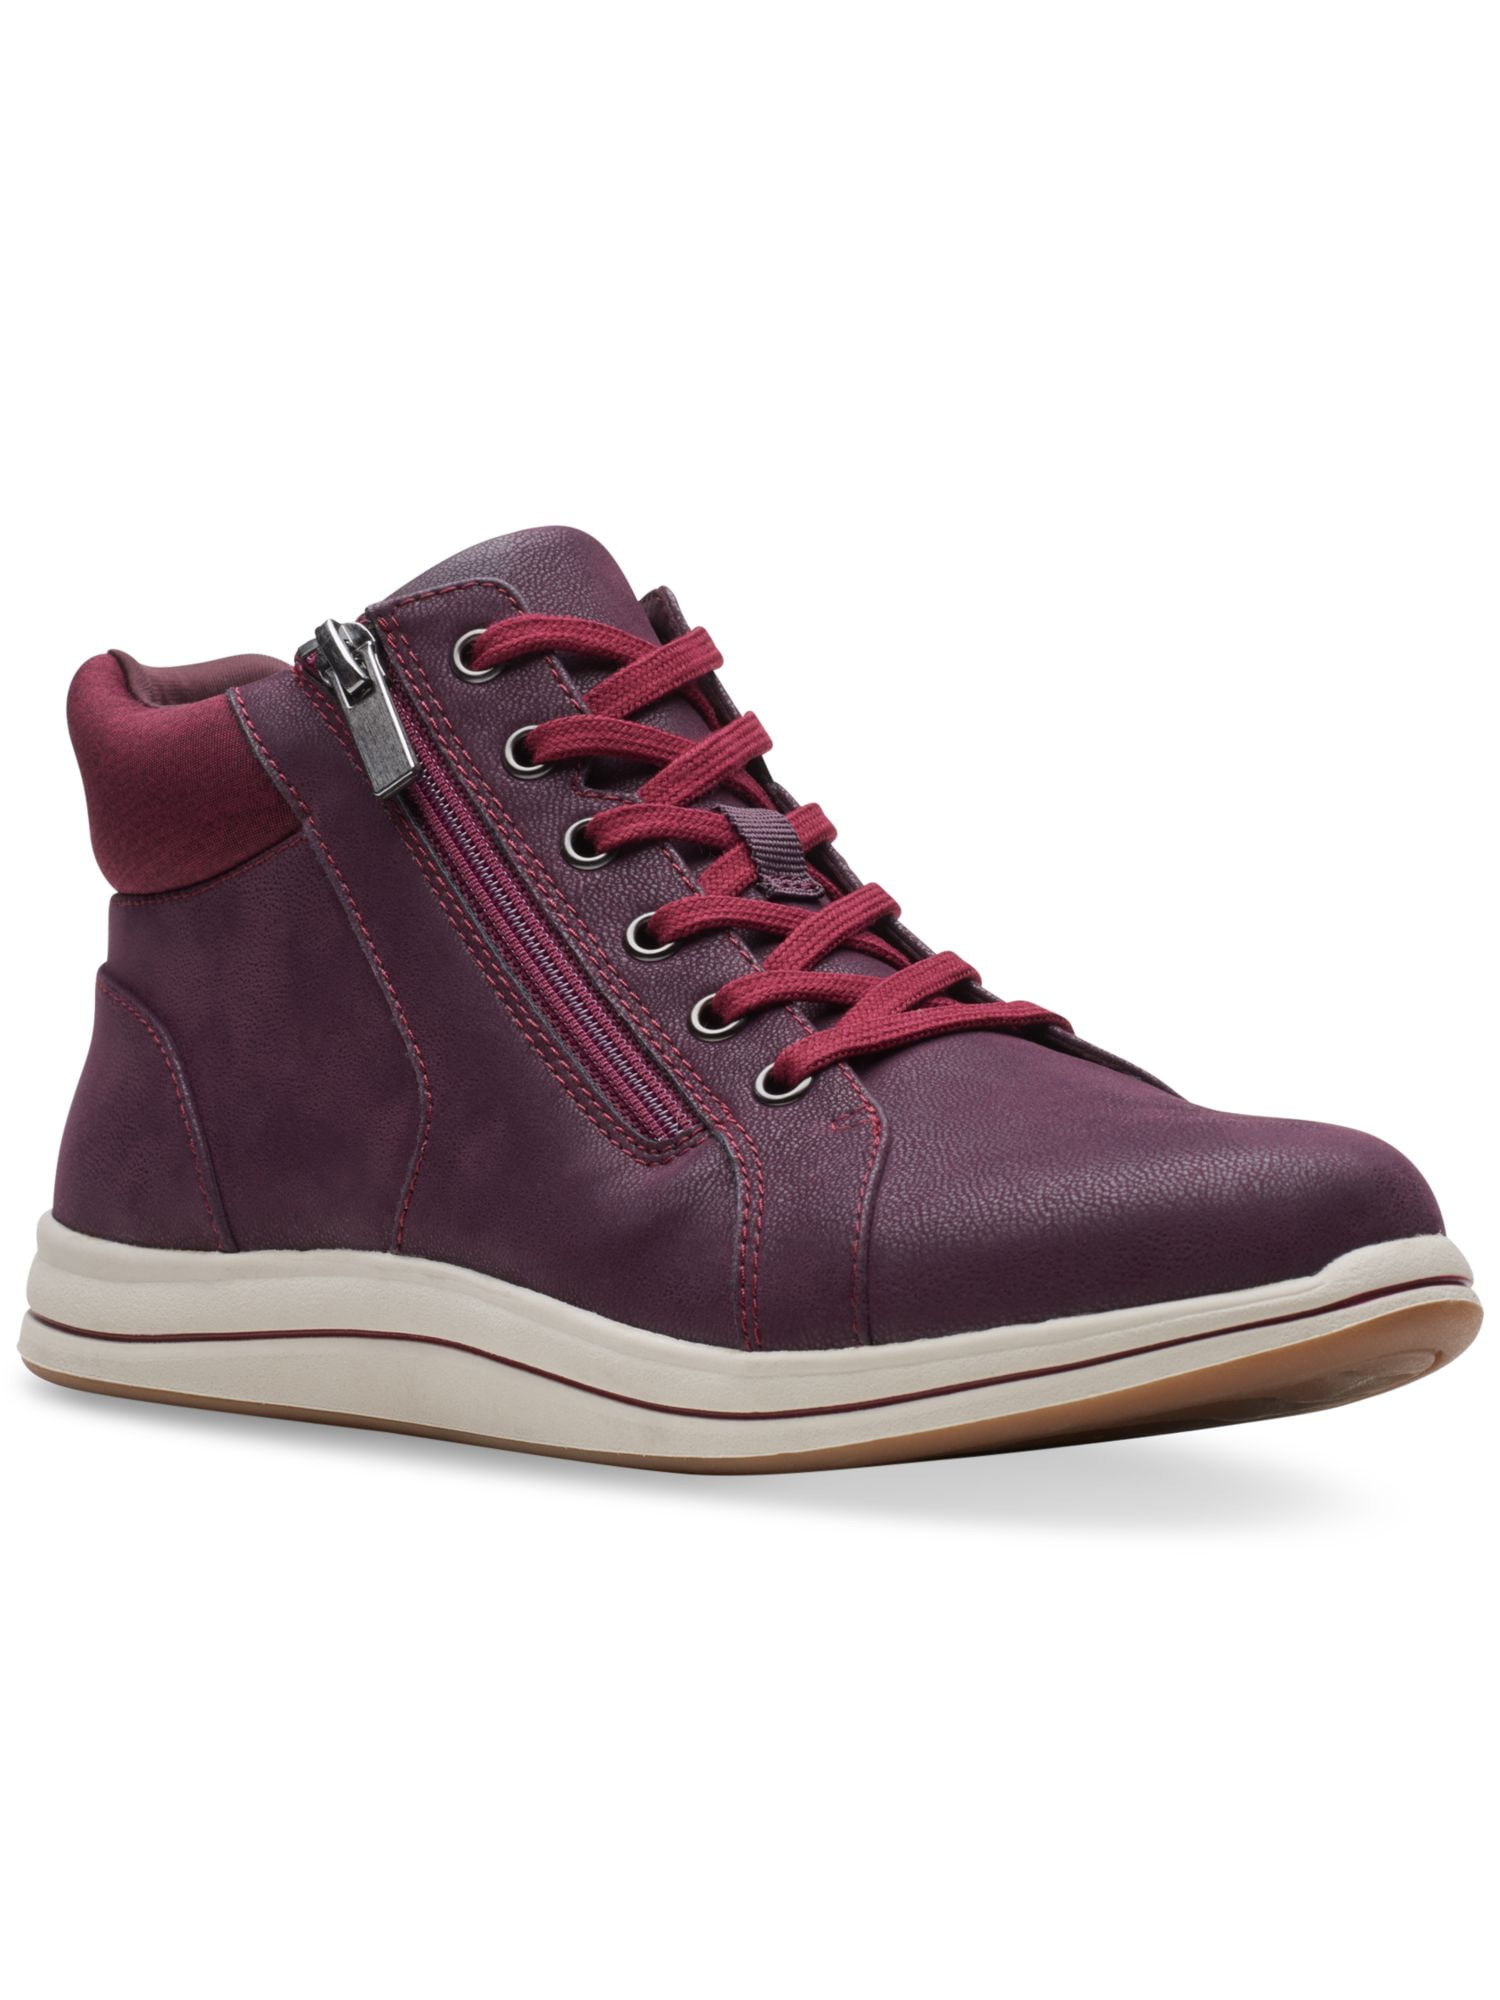 Footpatrol x Clarks Sportswear Tawyer FP | Clarks shoes mens, Sneakers men  fashion, Mens fashion shoes